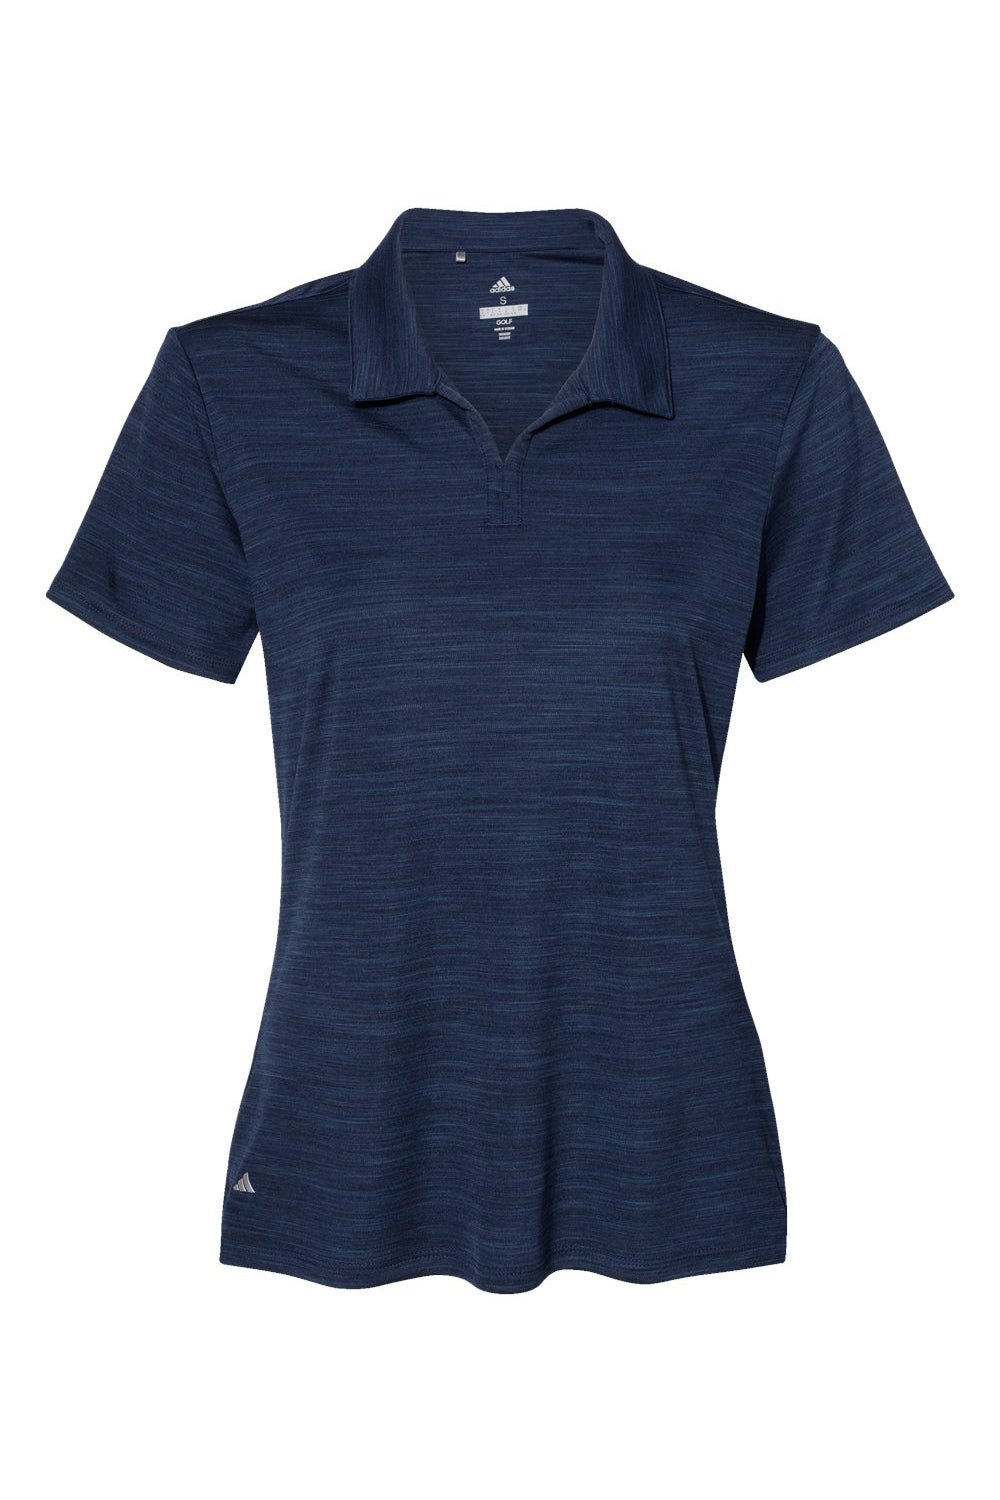 Adidas A403 Womens Melange Short Sleeve Polo Shirt Collegiate Navy Blue Melange Flat Front